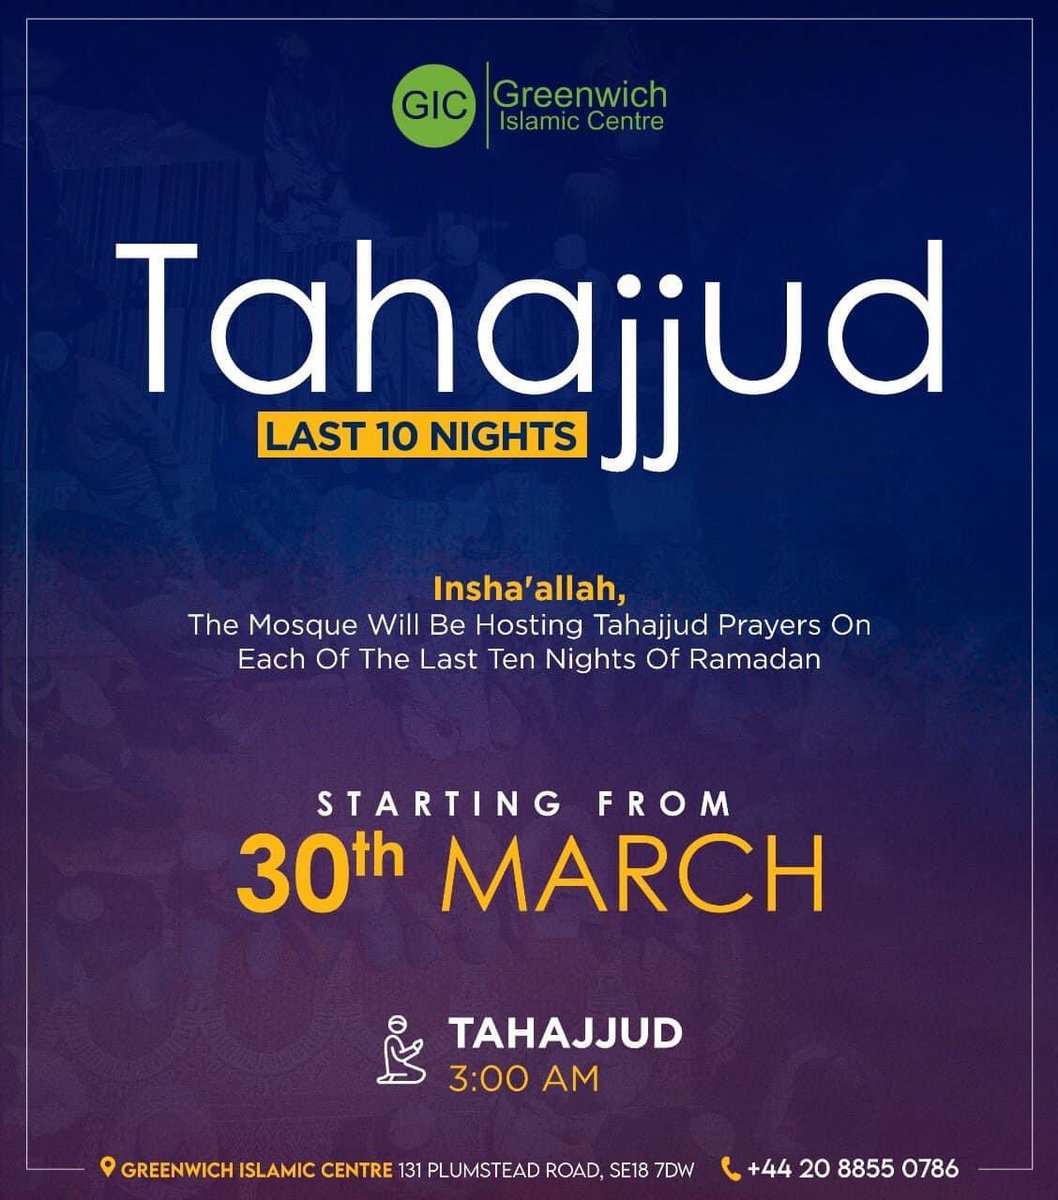 🕌 Join us at Greenwich Islamic Centre for Tahajjud prayers during the last 10 nights of Ramadan, starting from March 30th at 3:00 AM #Ramadan #TahajjudPrayers